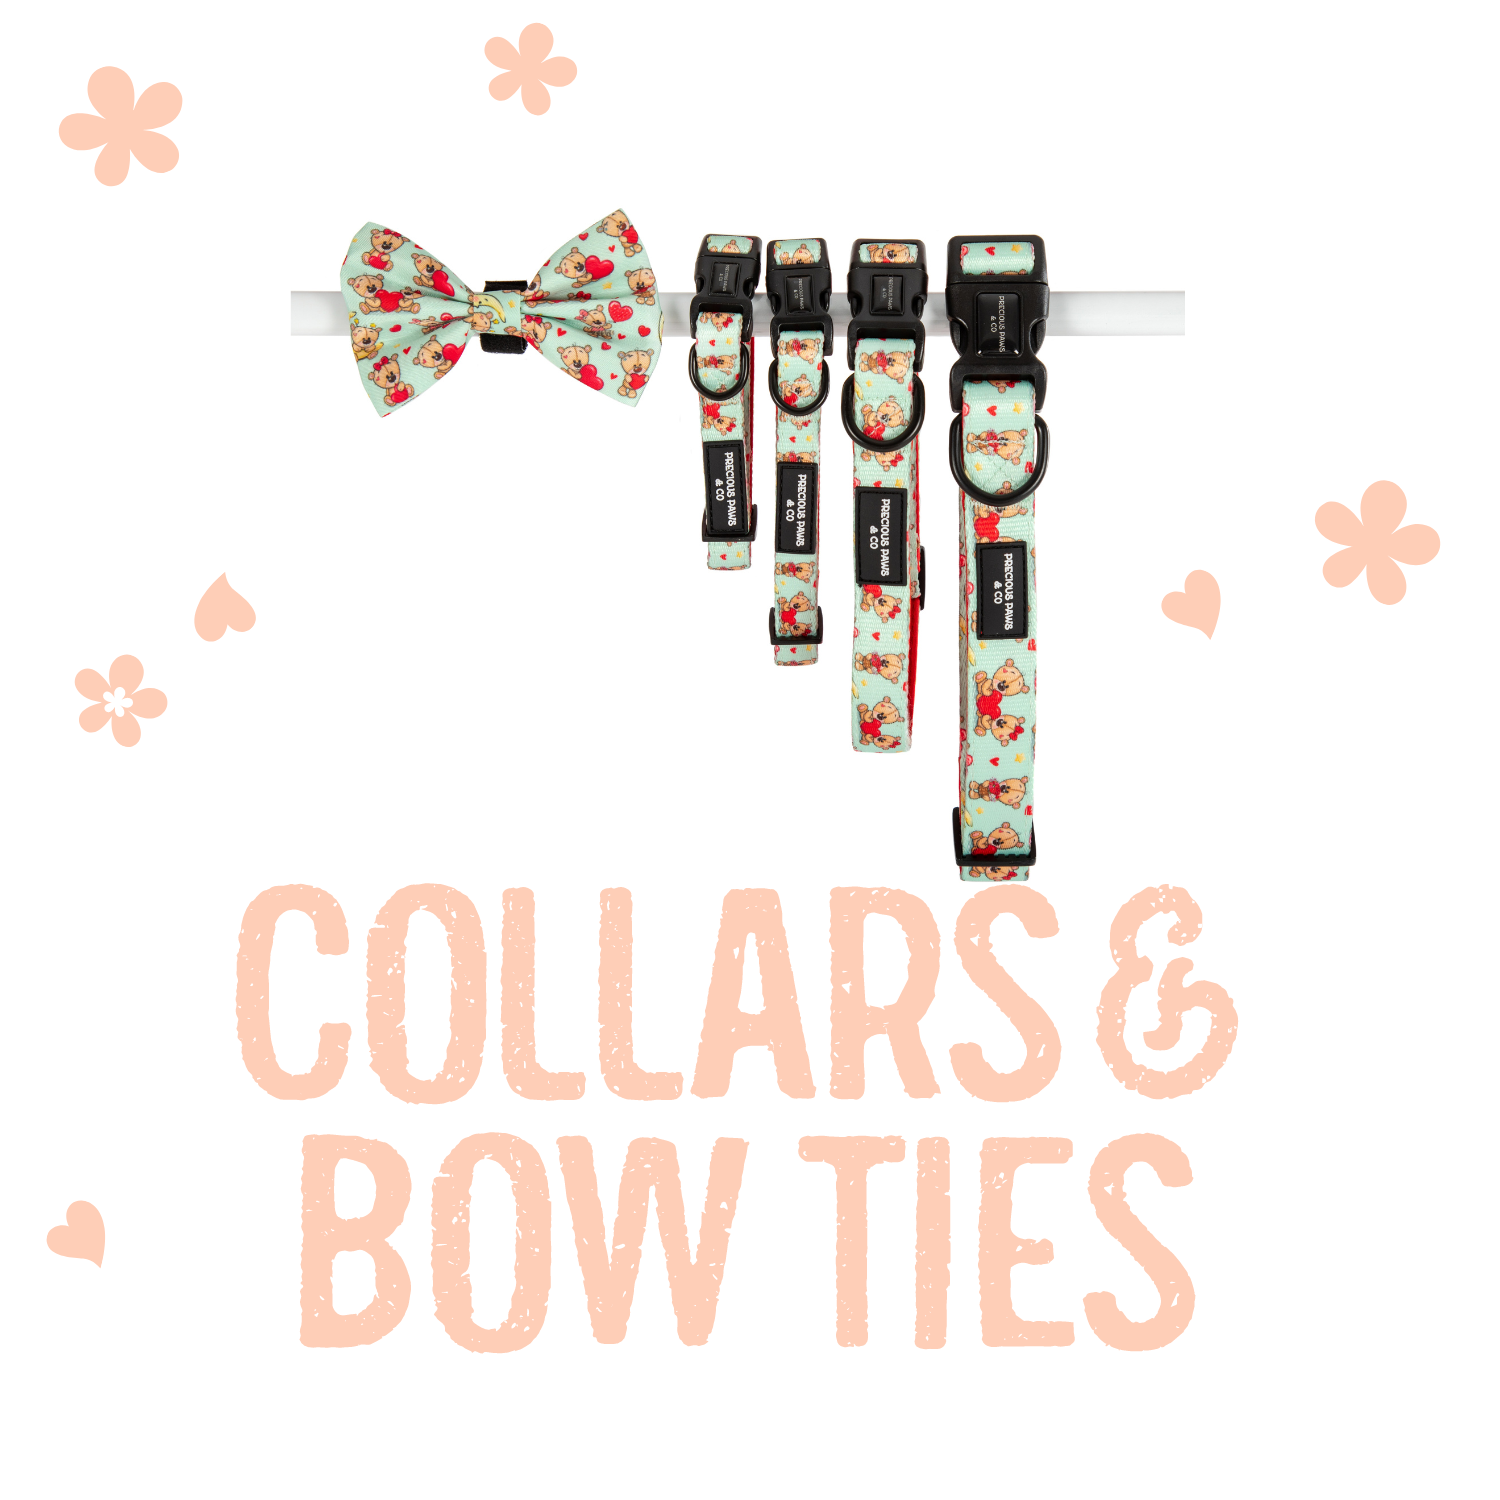 Dog Collars & Bow Ties